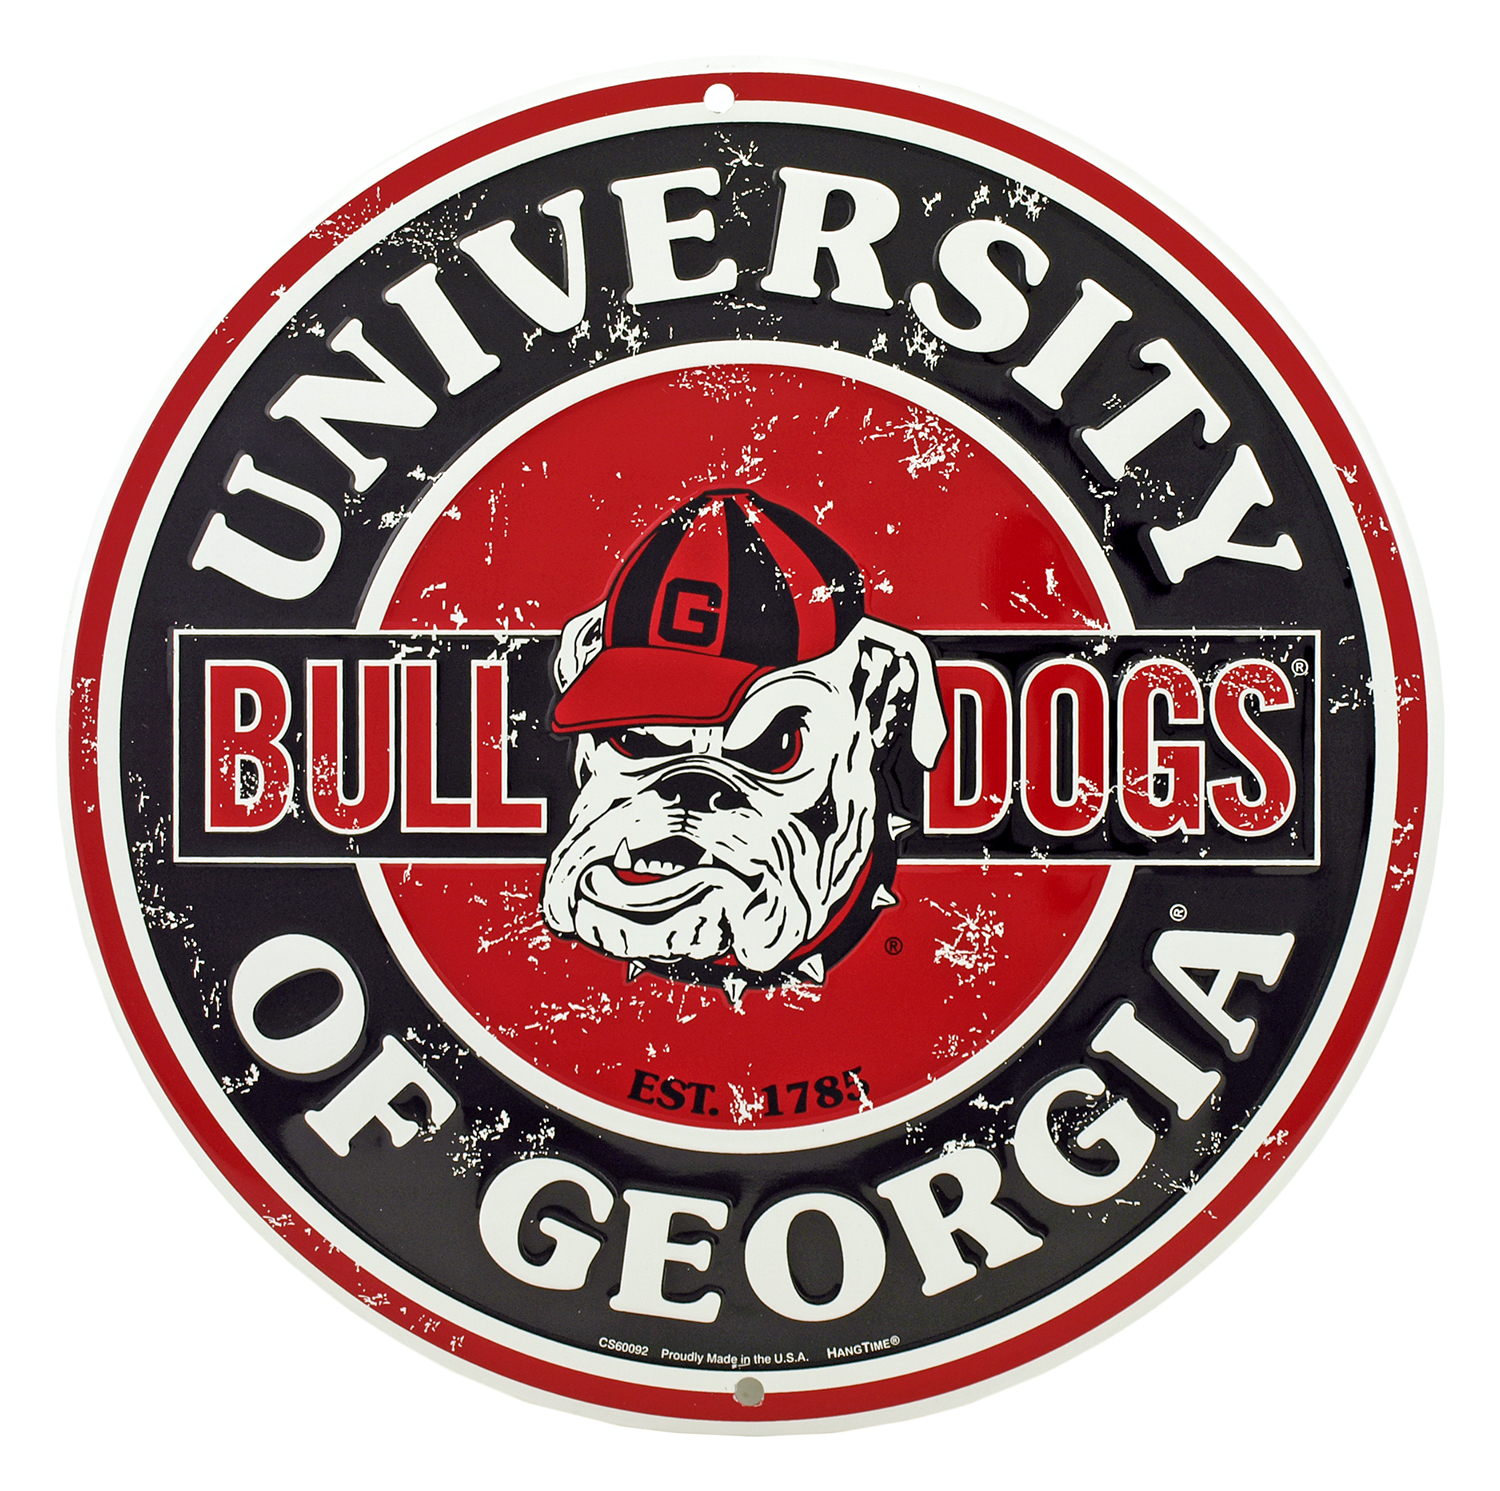 University of Georgia logo